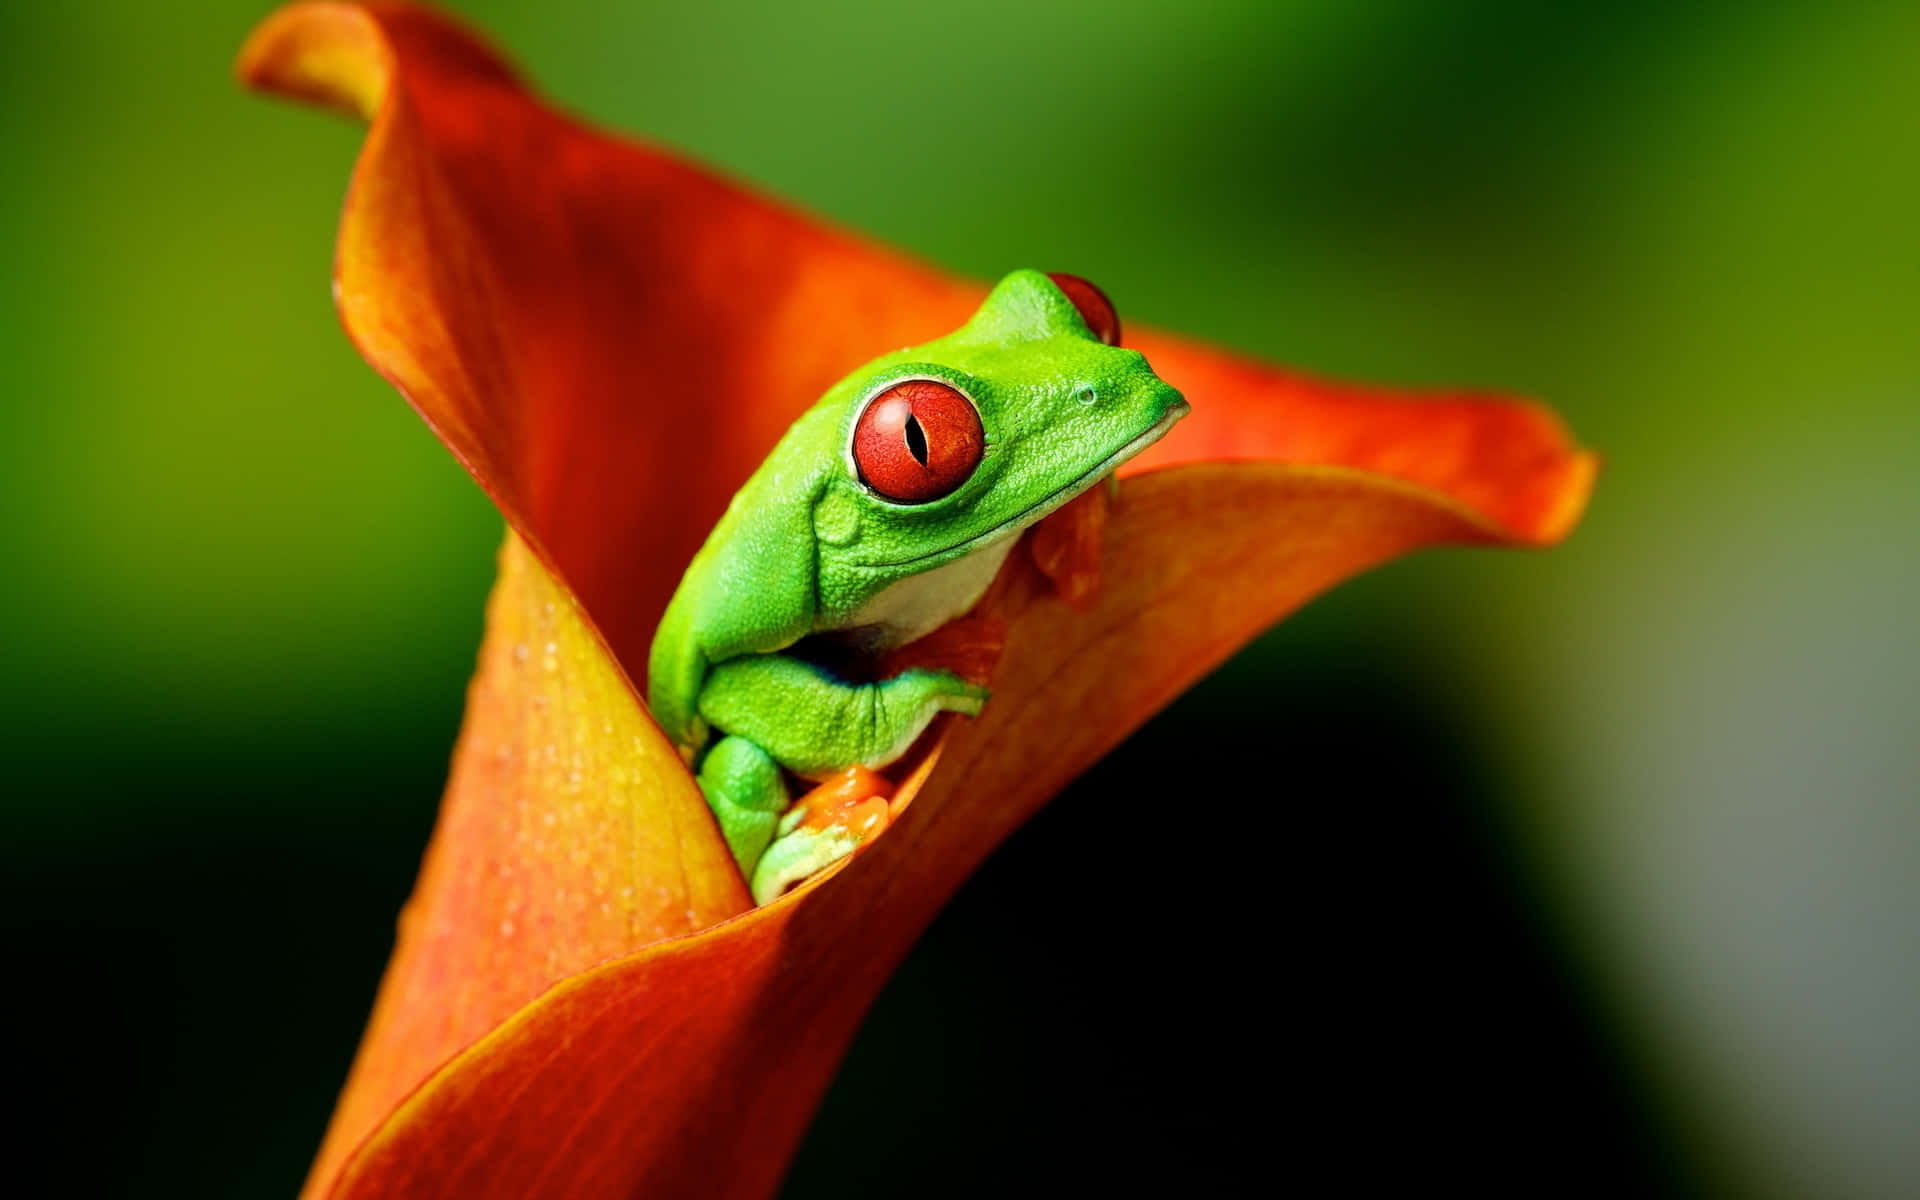 Green Frog on a Leaf